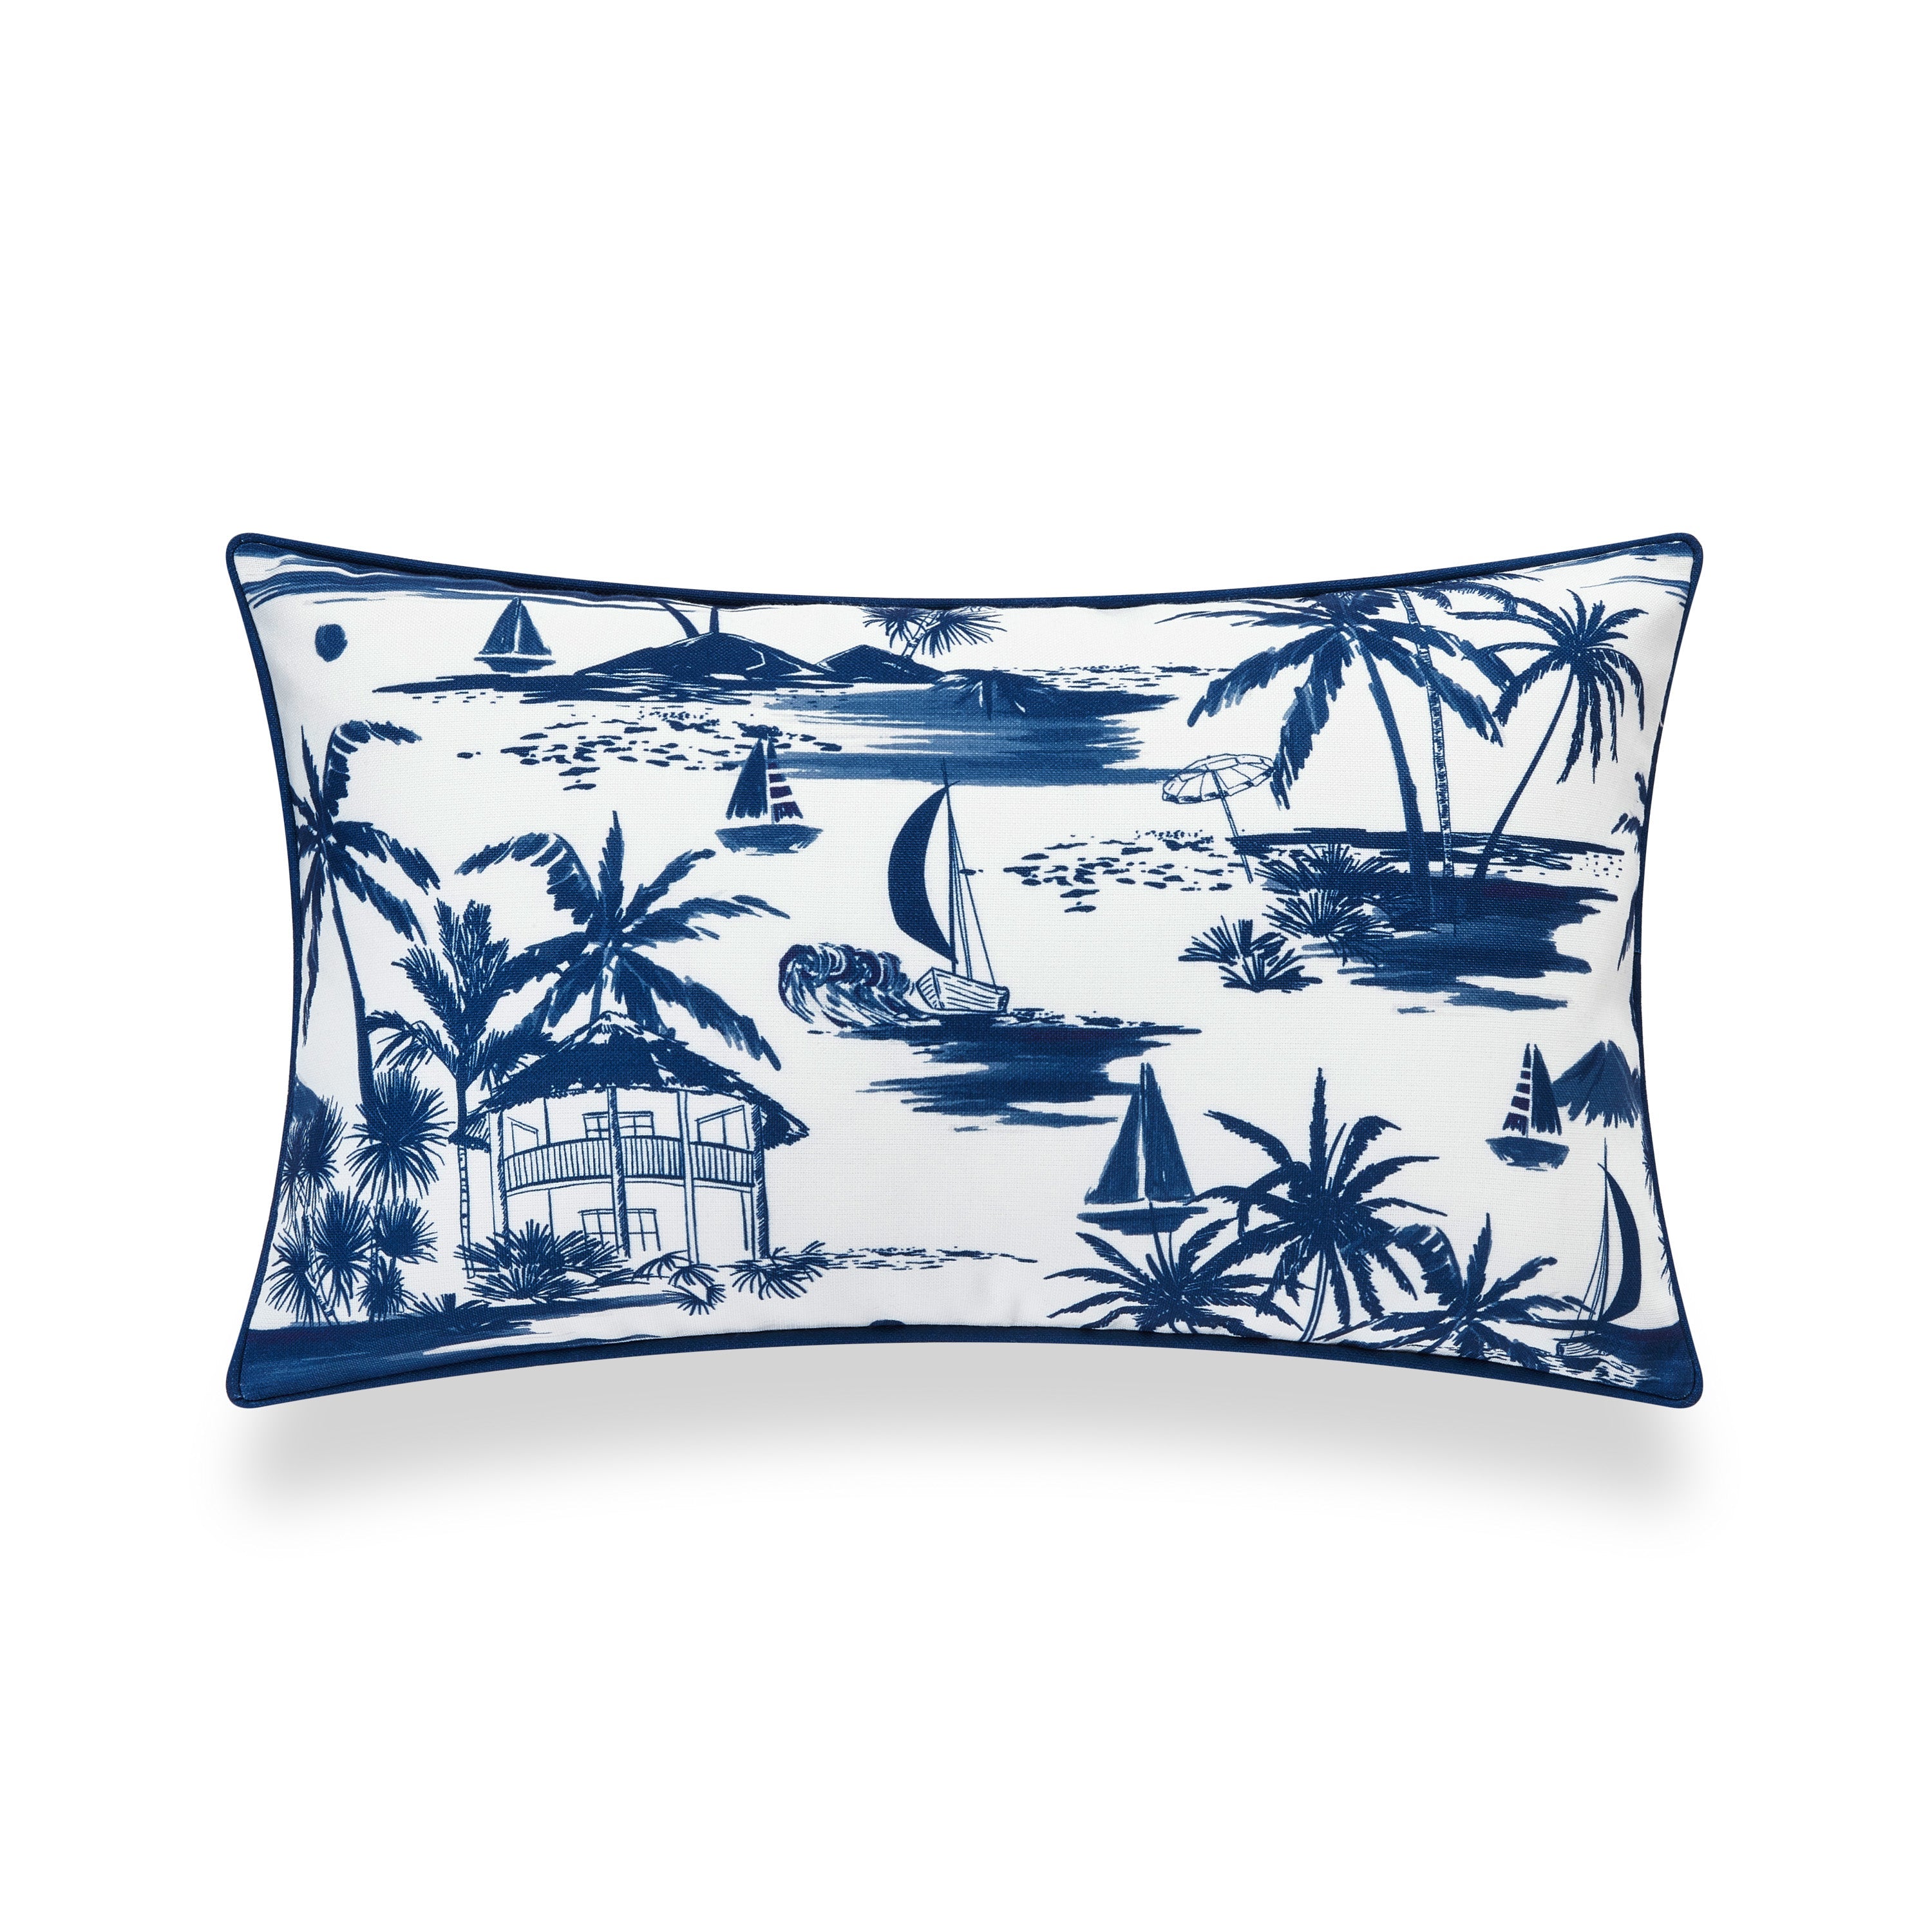 Coastal Hampton Style Indoor Outdoor Lumbar Pillow Cover, Beach Scene, Navy Blue, 12"x20"